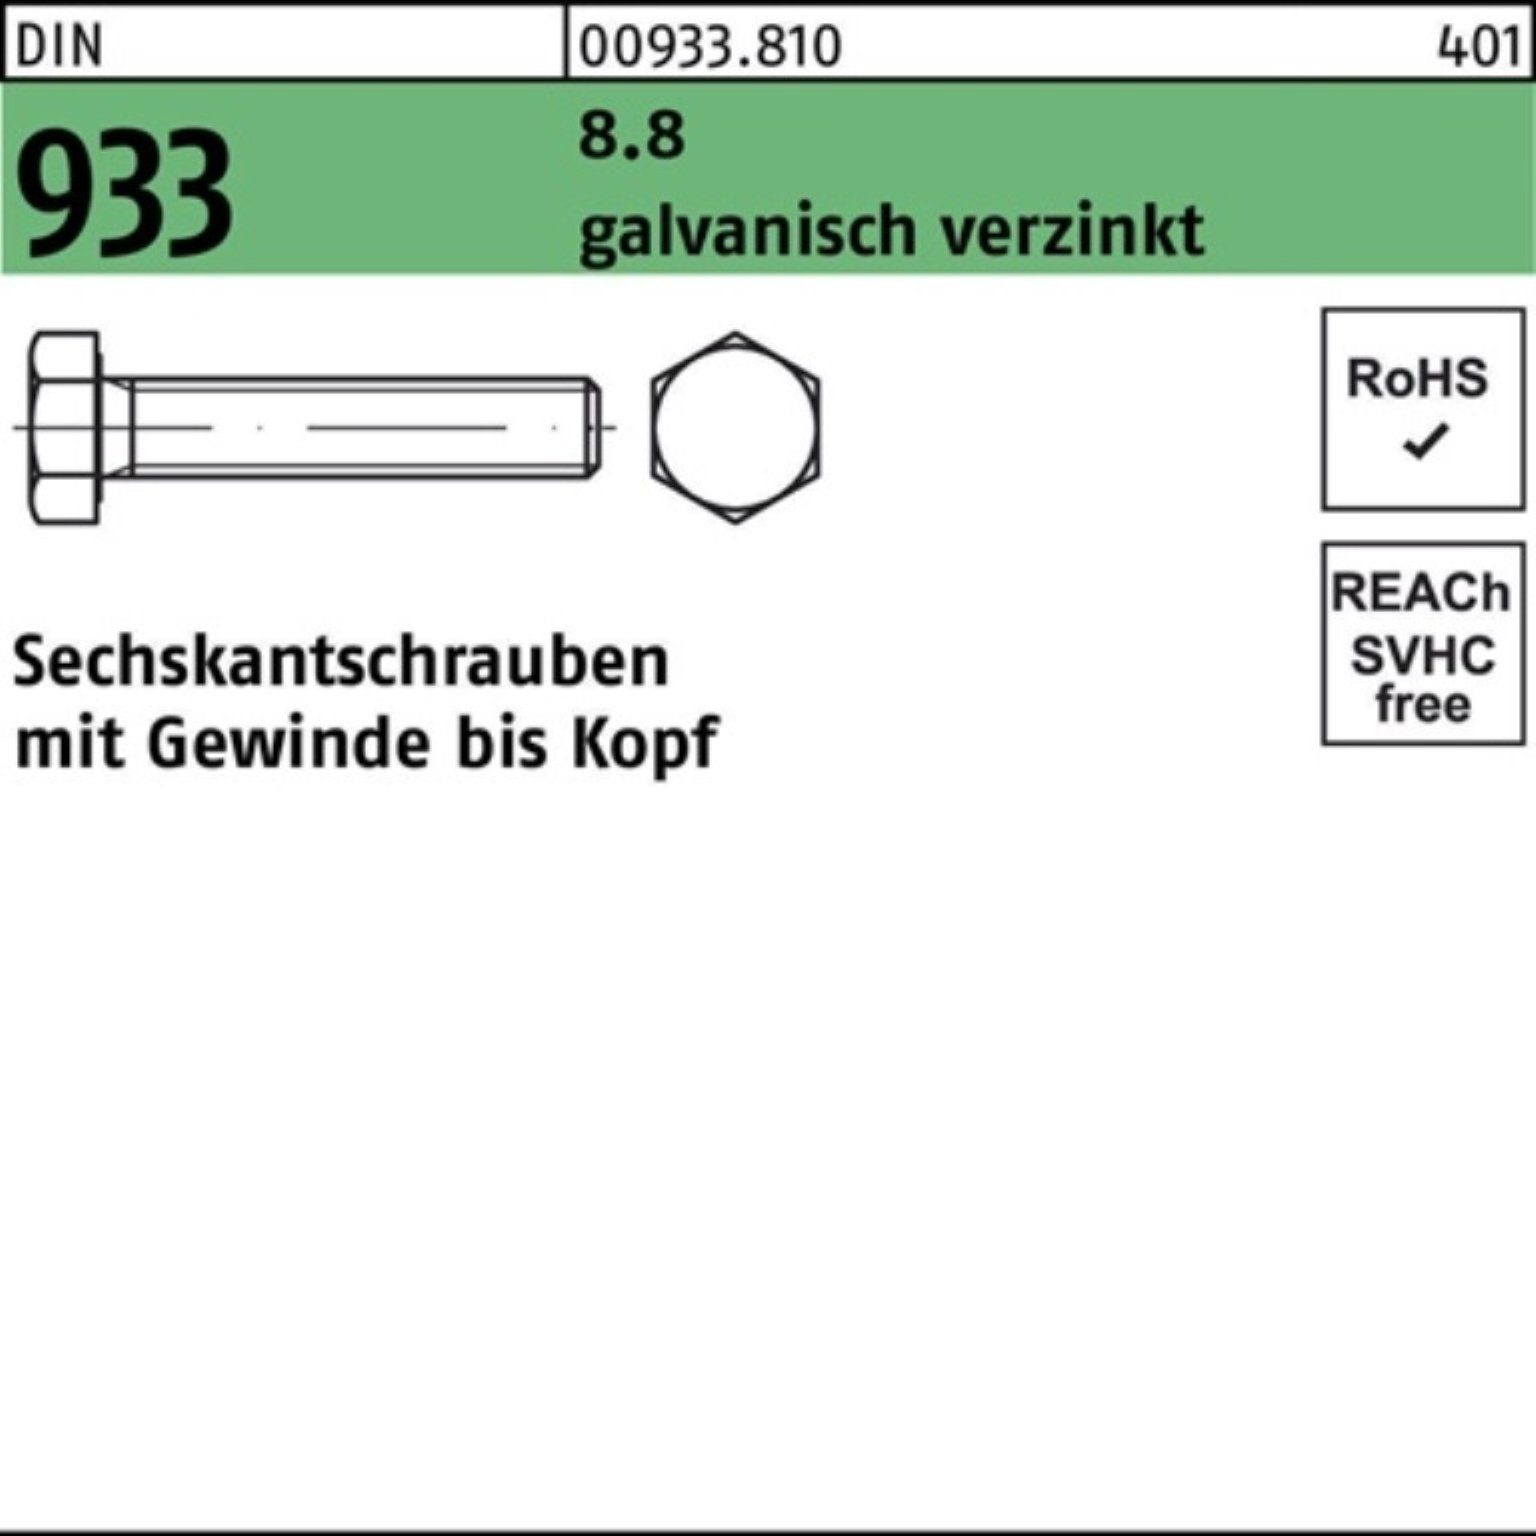 Reyher Sechskantschraube 100er Pack galv.verz. 933 Sechskantschraube Stü 100 DIN VG 1 M42x 8.8